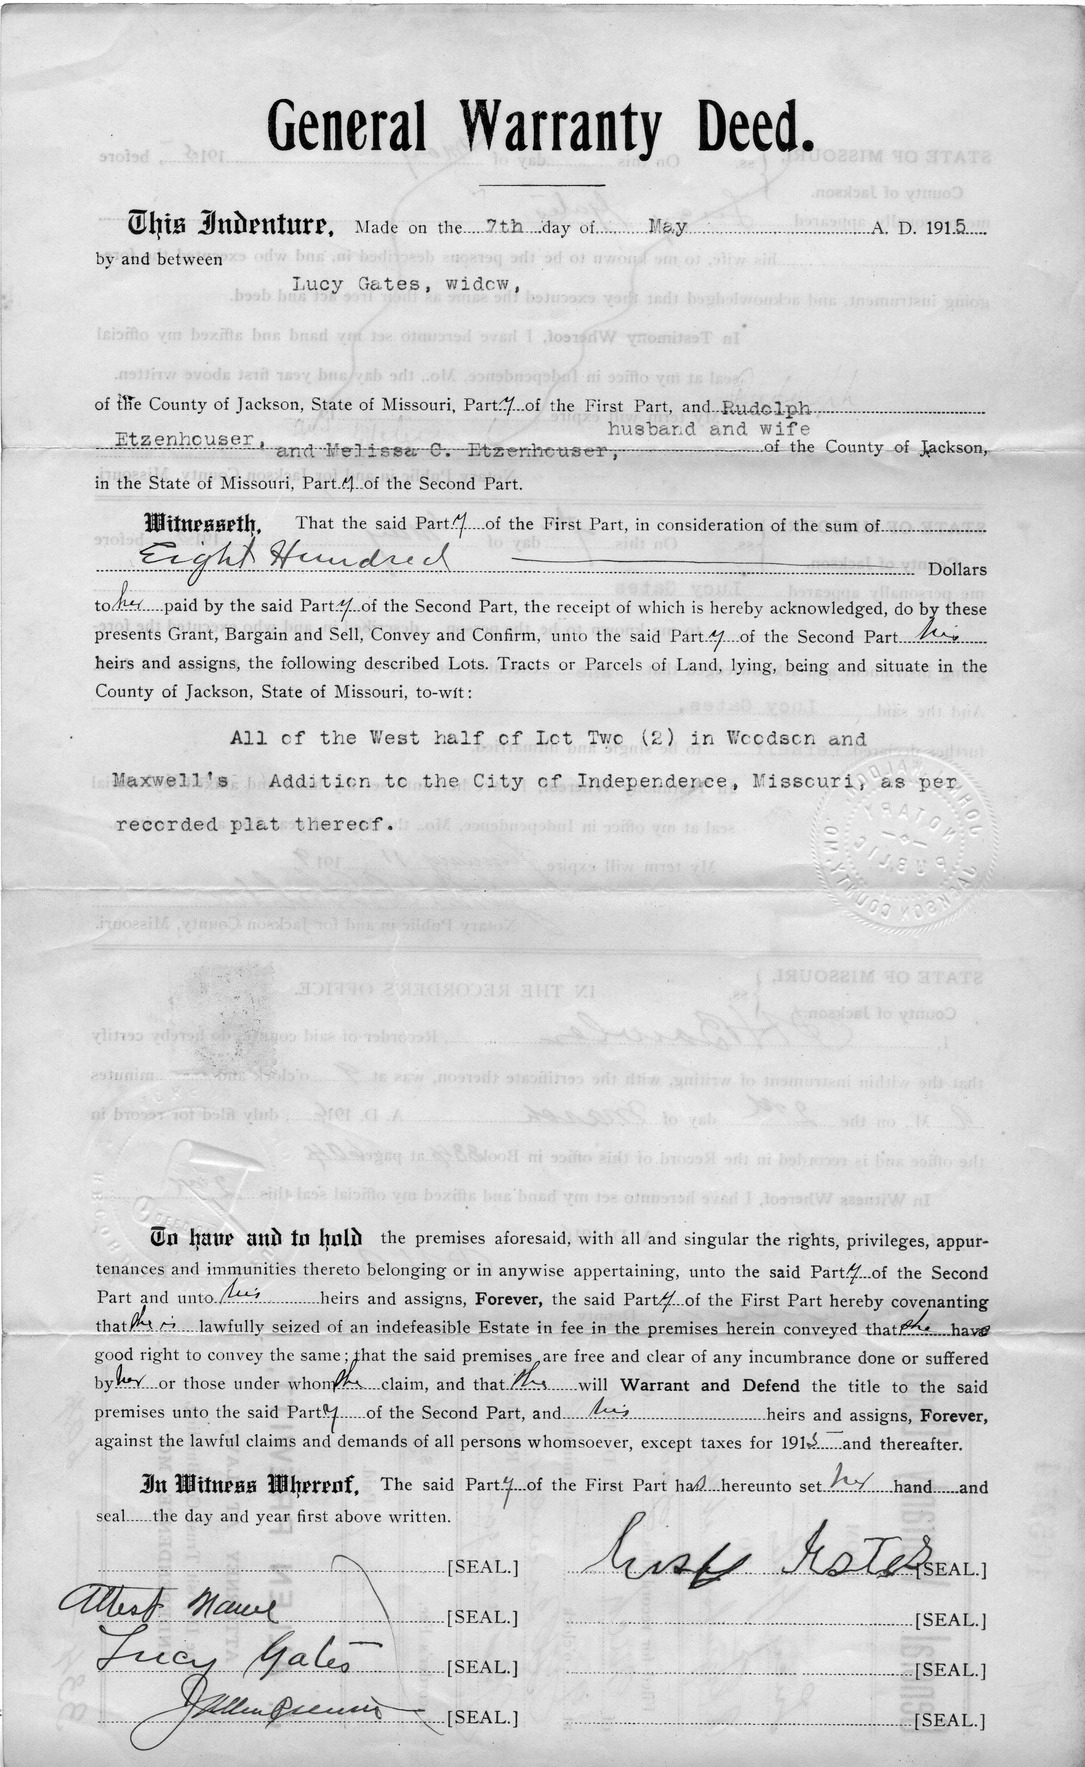 General Warranty Deed from Lucy Gates to Rudolph Etzenhouser and Melissa C. Etzenhouser